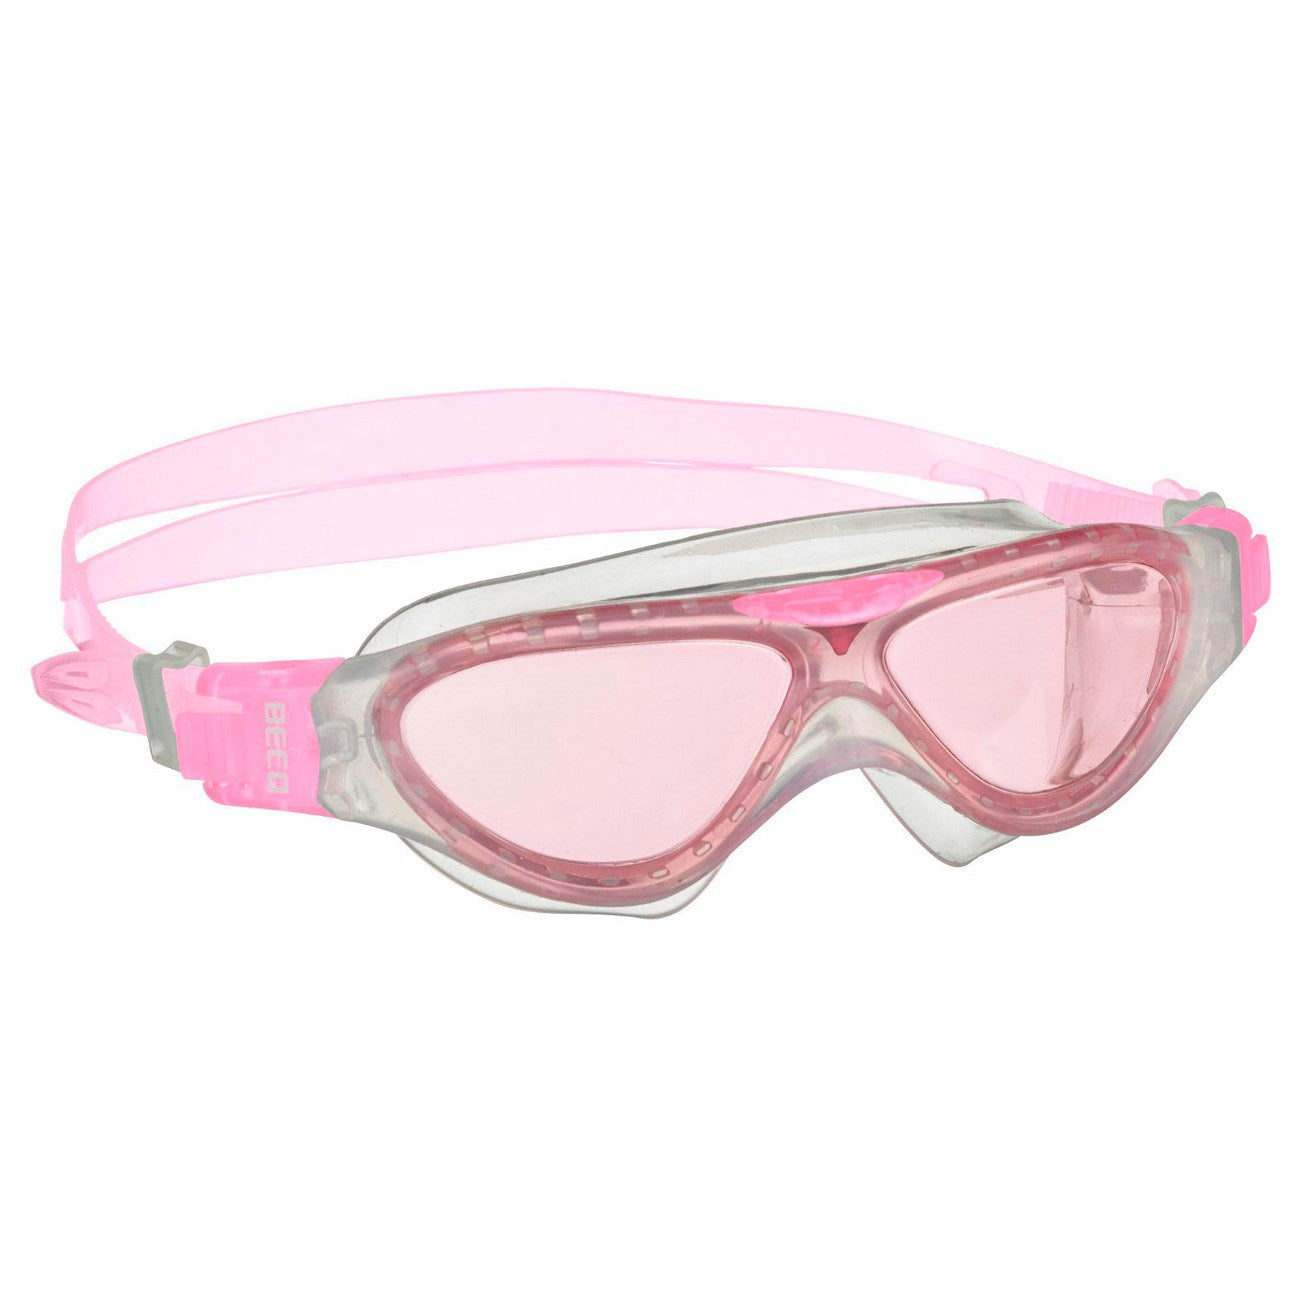 BECO Pink Svømmebrille TOULON 8+